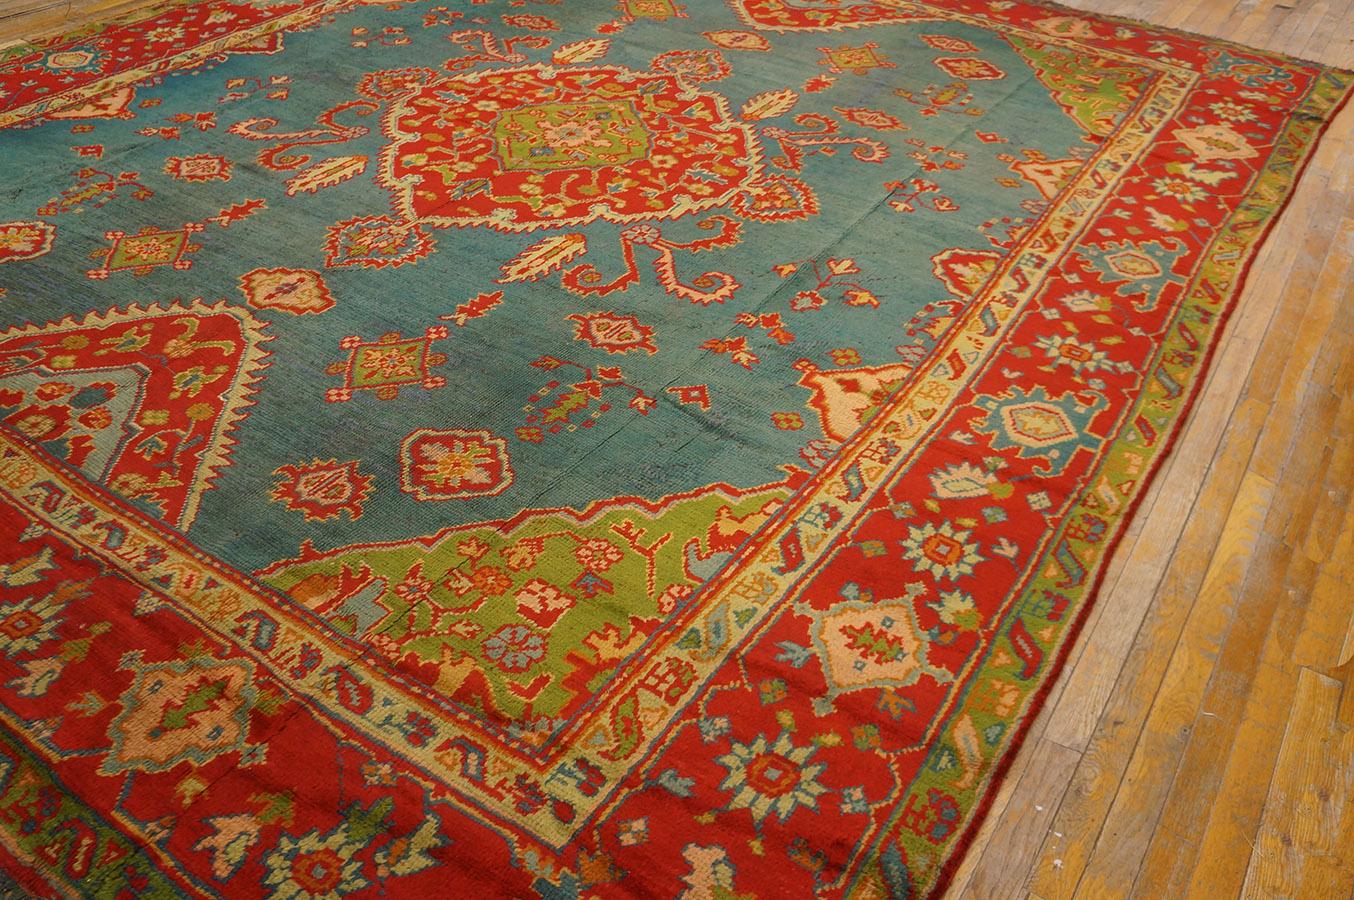 Late 19th Century Turkish Oushak Carpet ( 11' 2'' x 13' 1'' - 340 x 398 cm ) For Sale 2